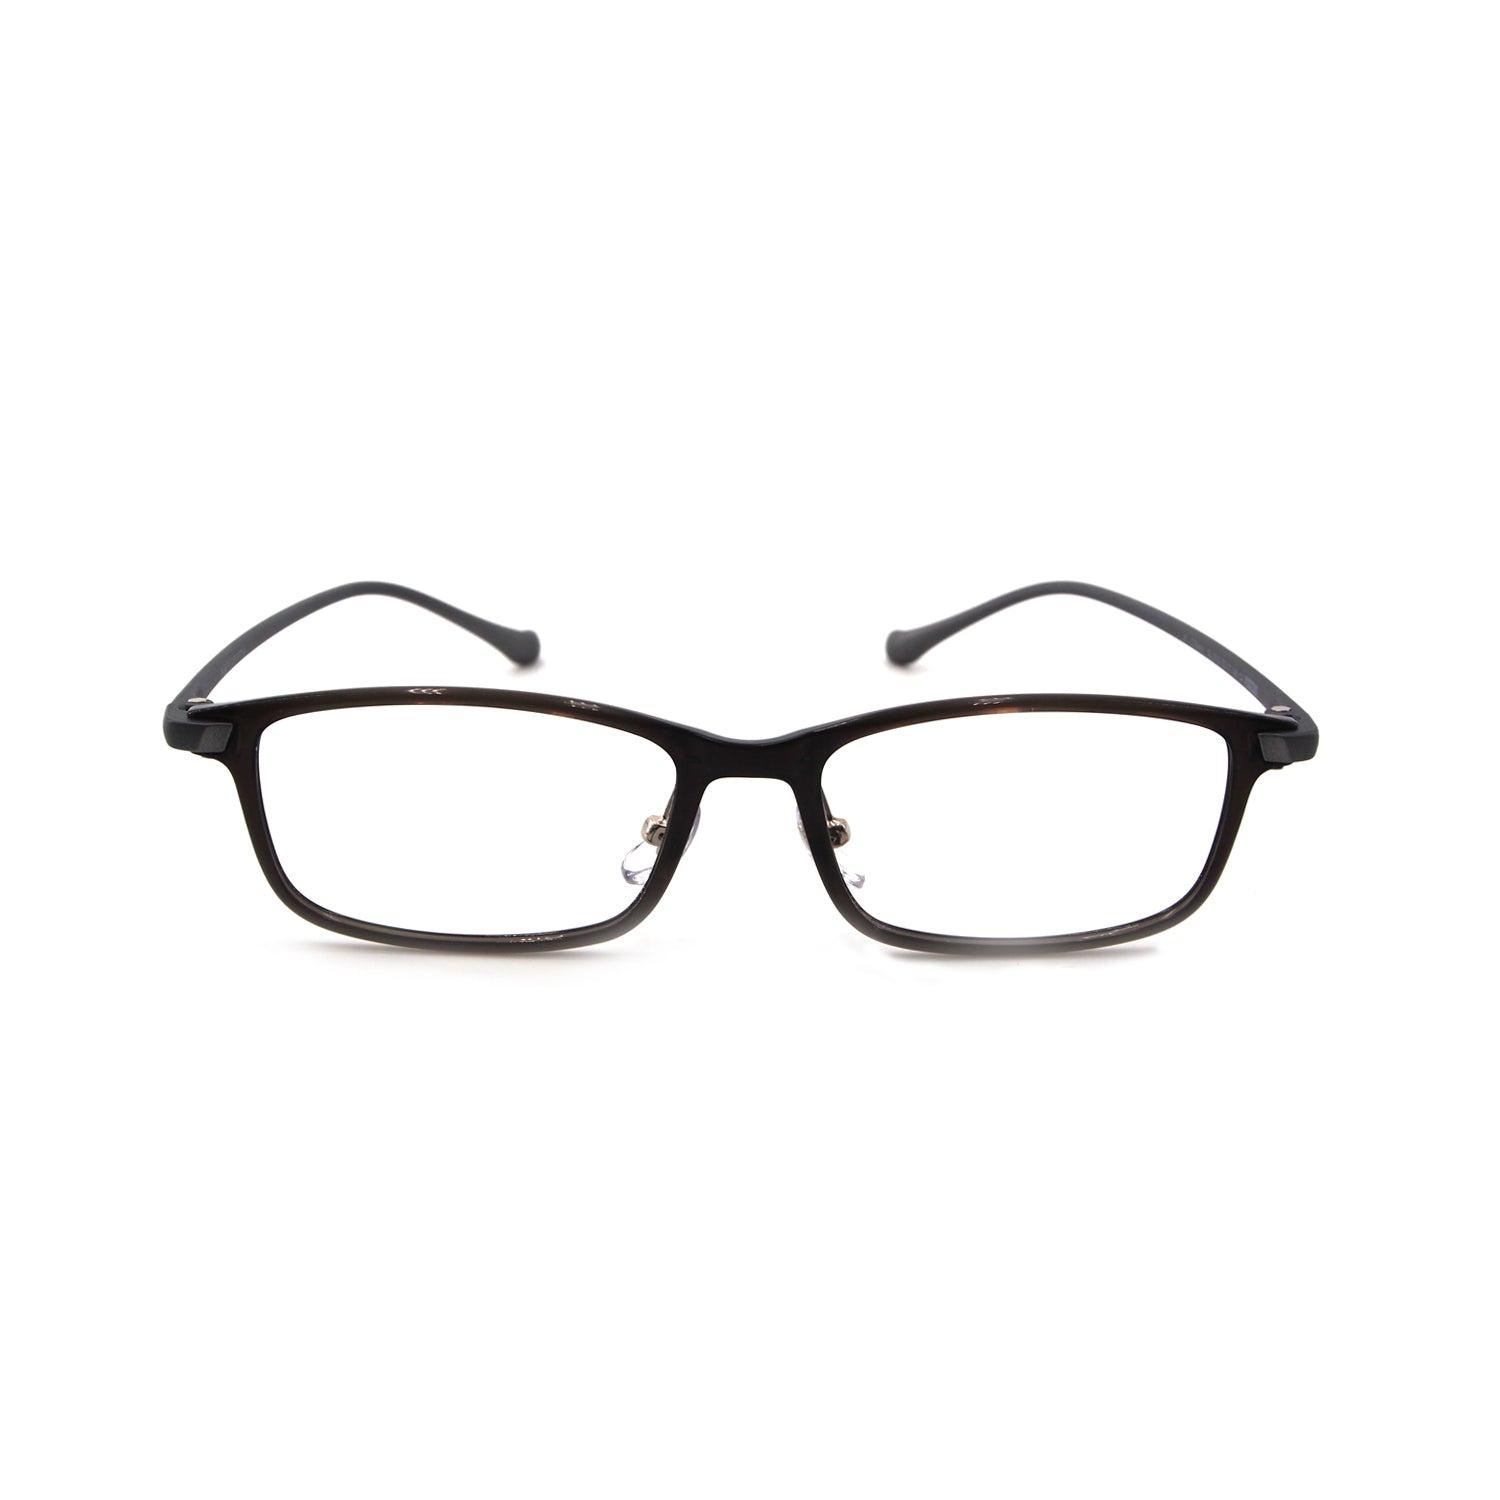 Papagayo in Anchor Grey Eyeglasses - sightonomy